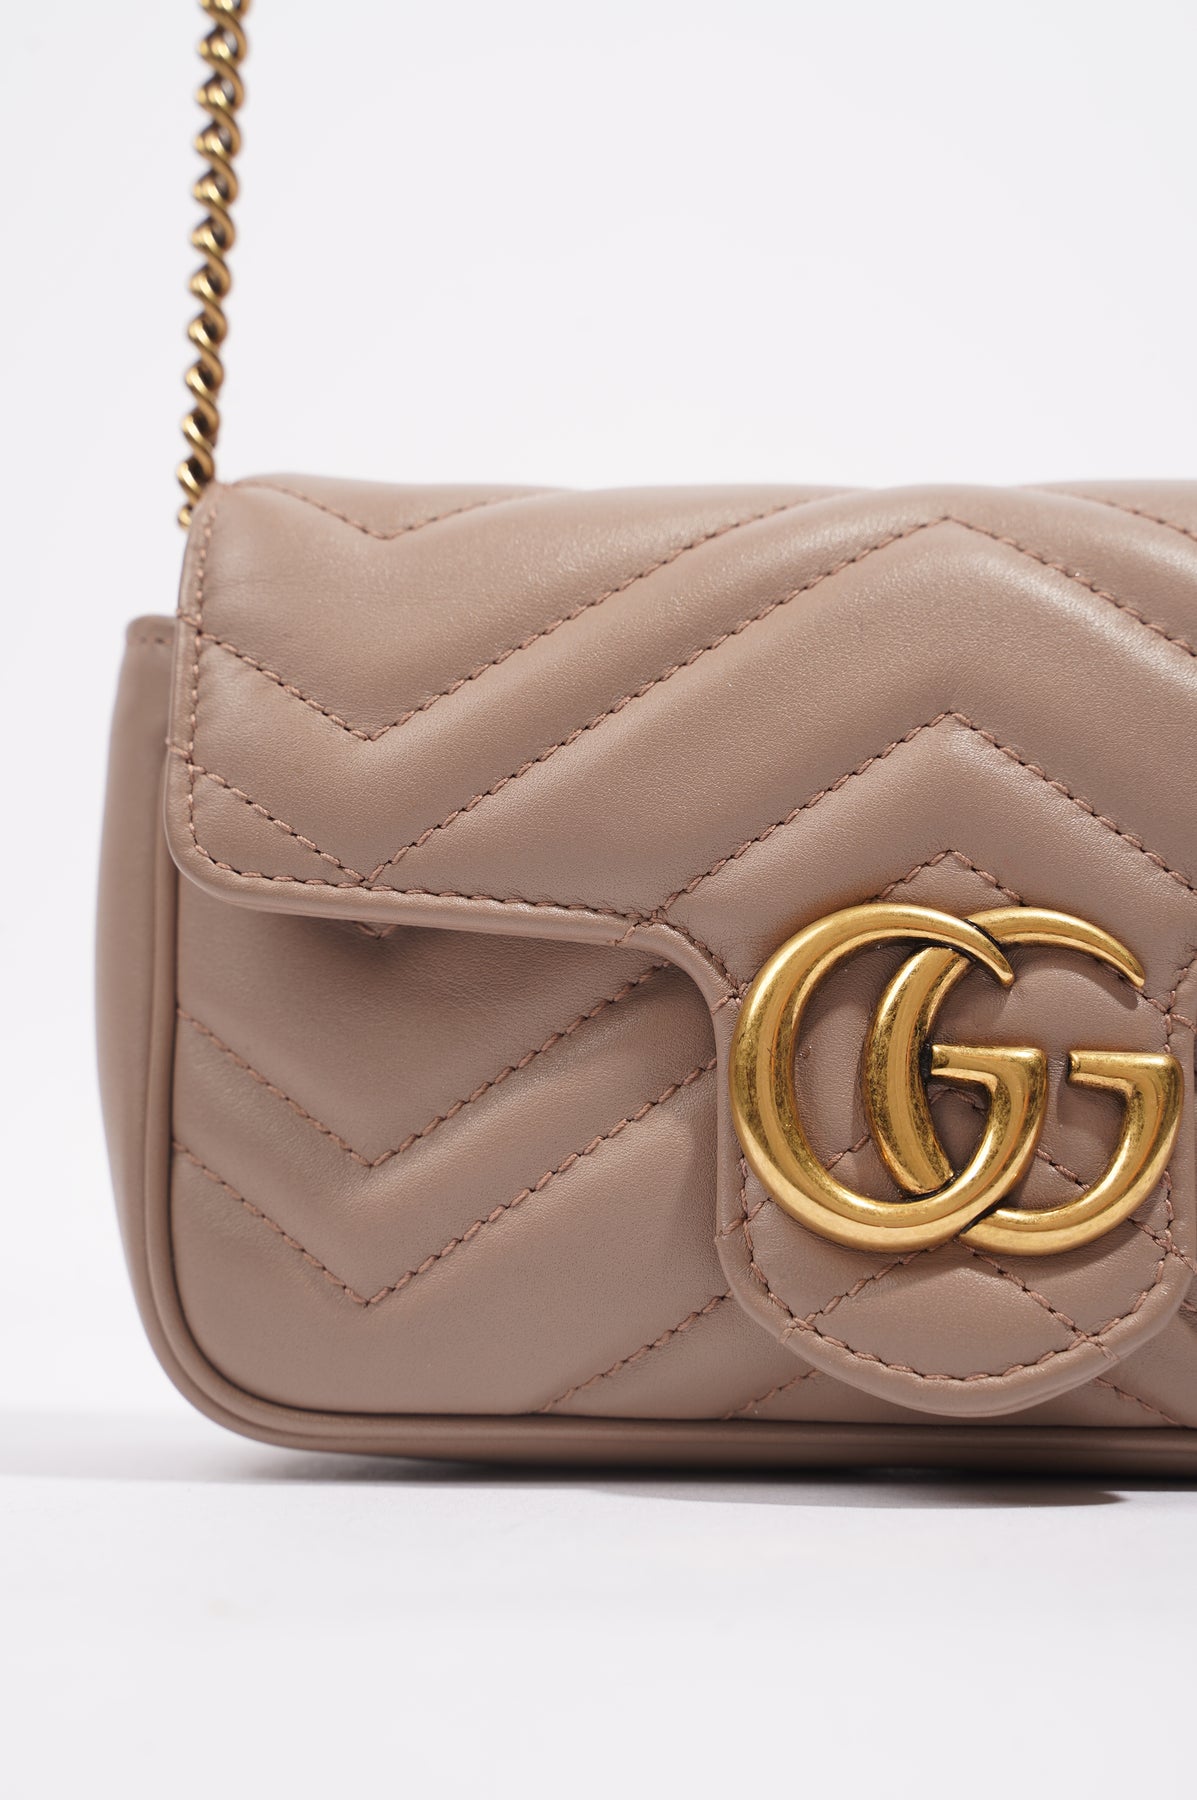 Gucci GG Marmont Flap Bag Matelasse Leather Mini Pink 2333197